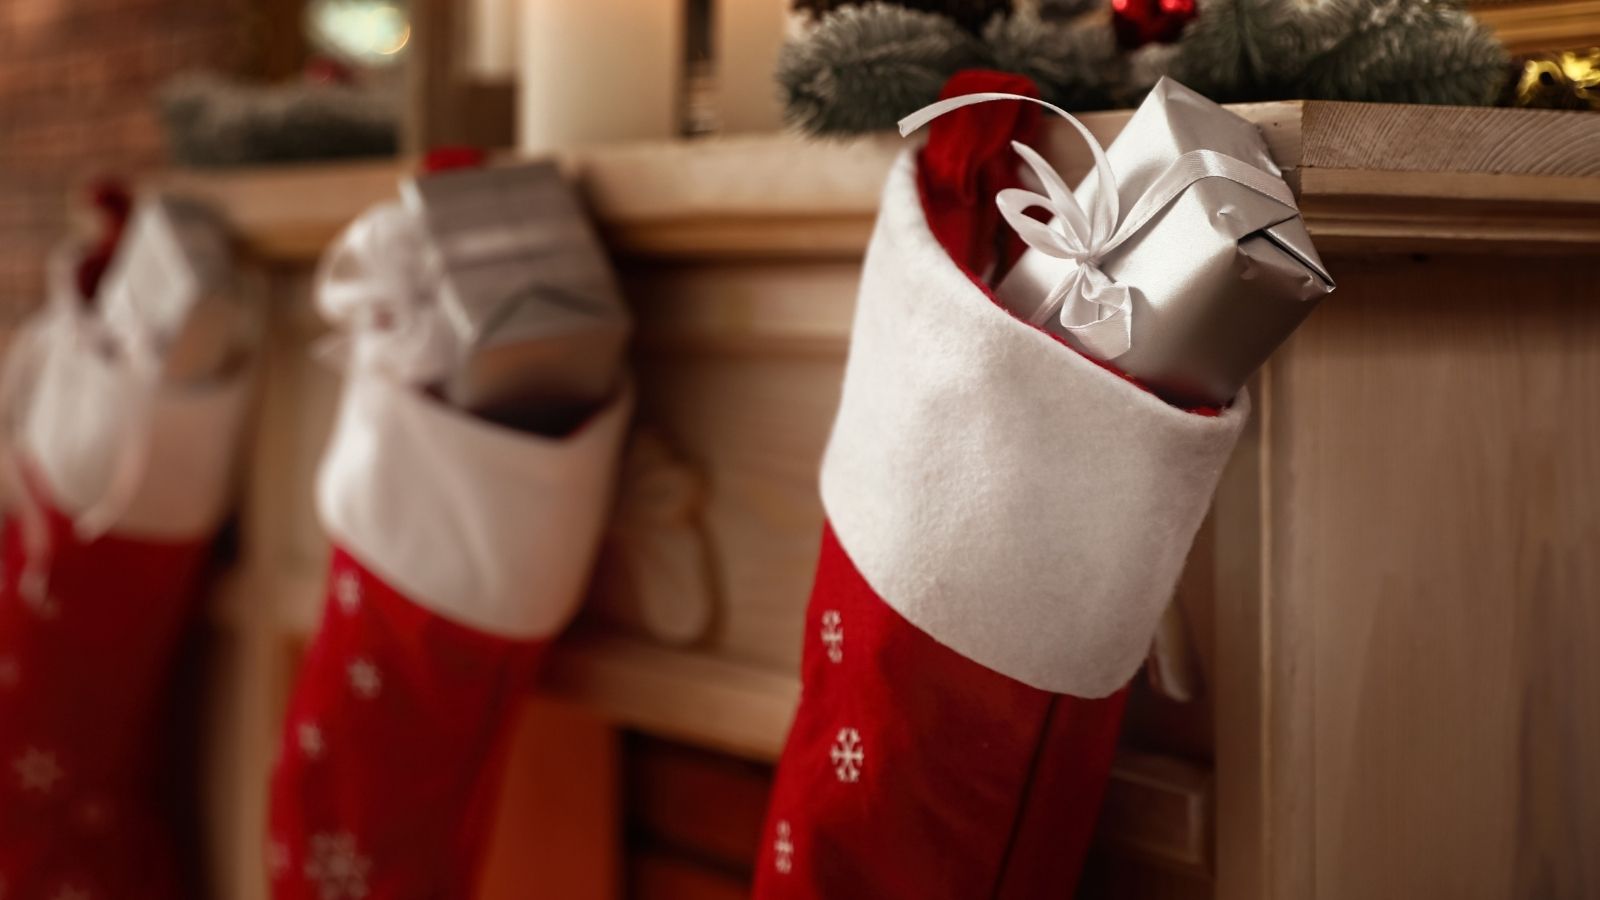 Stocking stuffers (Photo: Shutterstock)